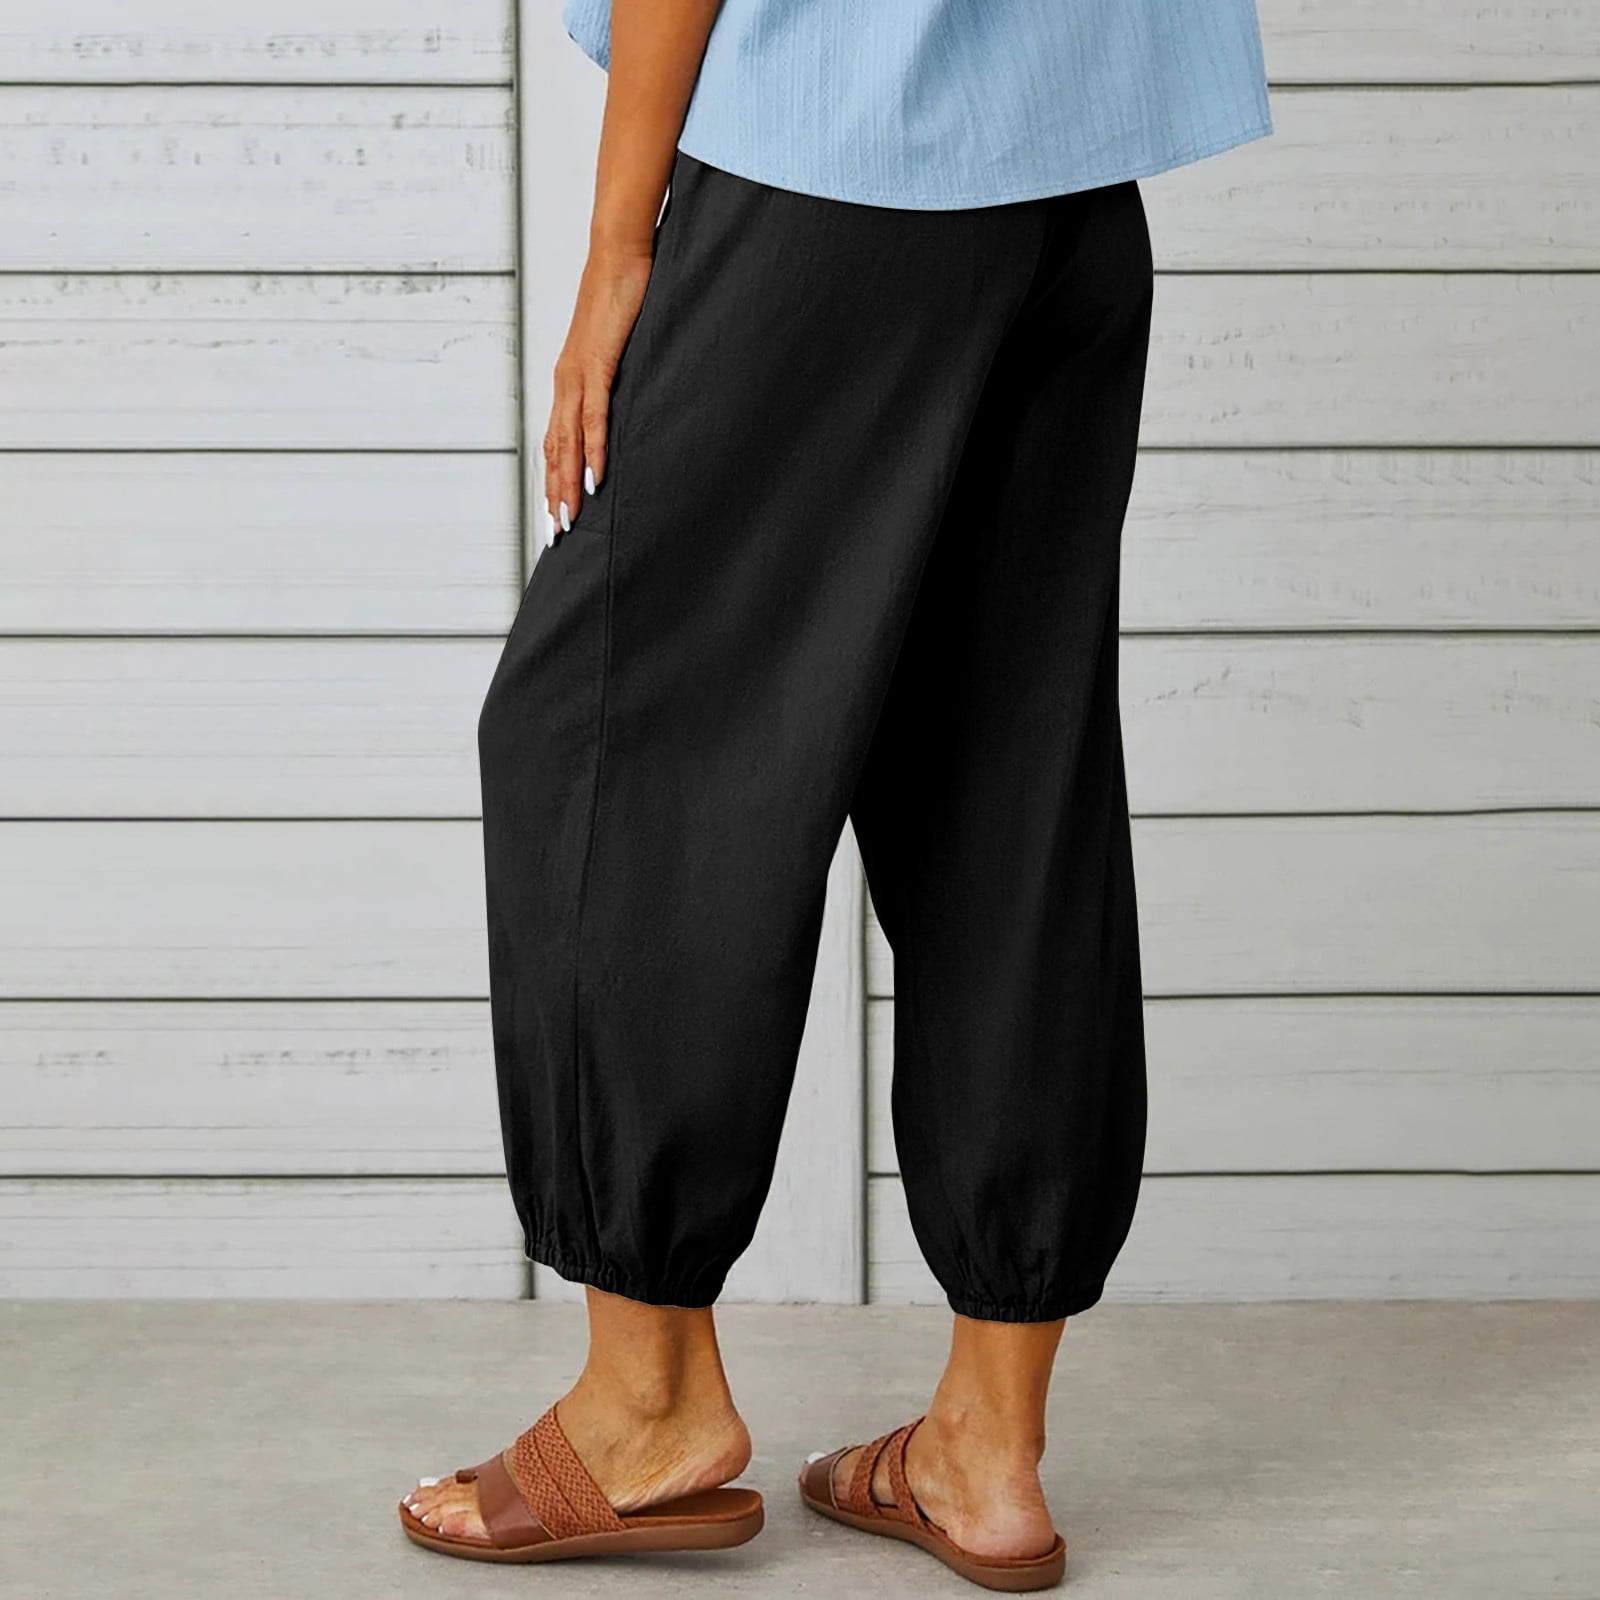 Womens Linen Capris Casual Summer Cropped Pants Elastic Waist Back Straight  Legs 3/4 Length Shorts Ankle Pants with Pockets, Khaki, XL price in Saudi  Arabia,  Saudi Arabia